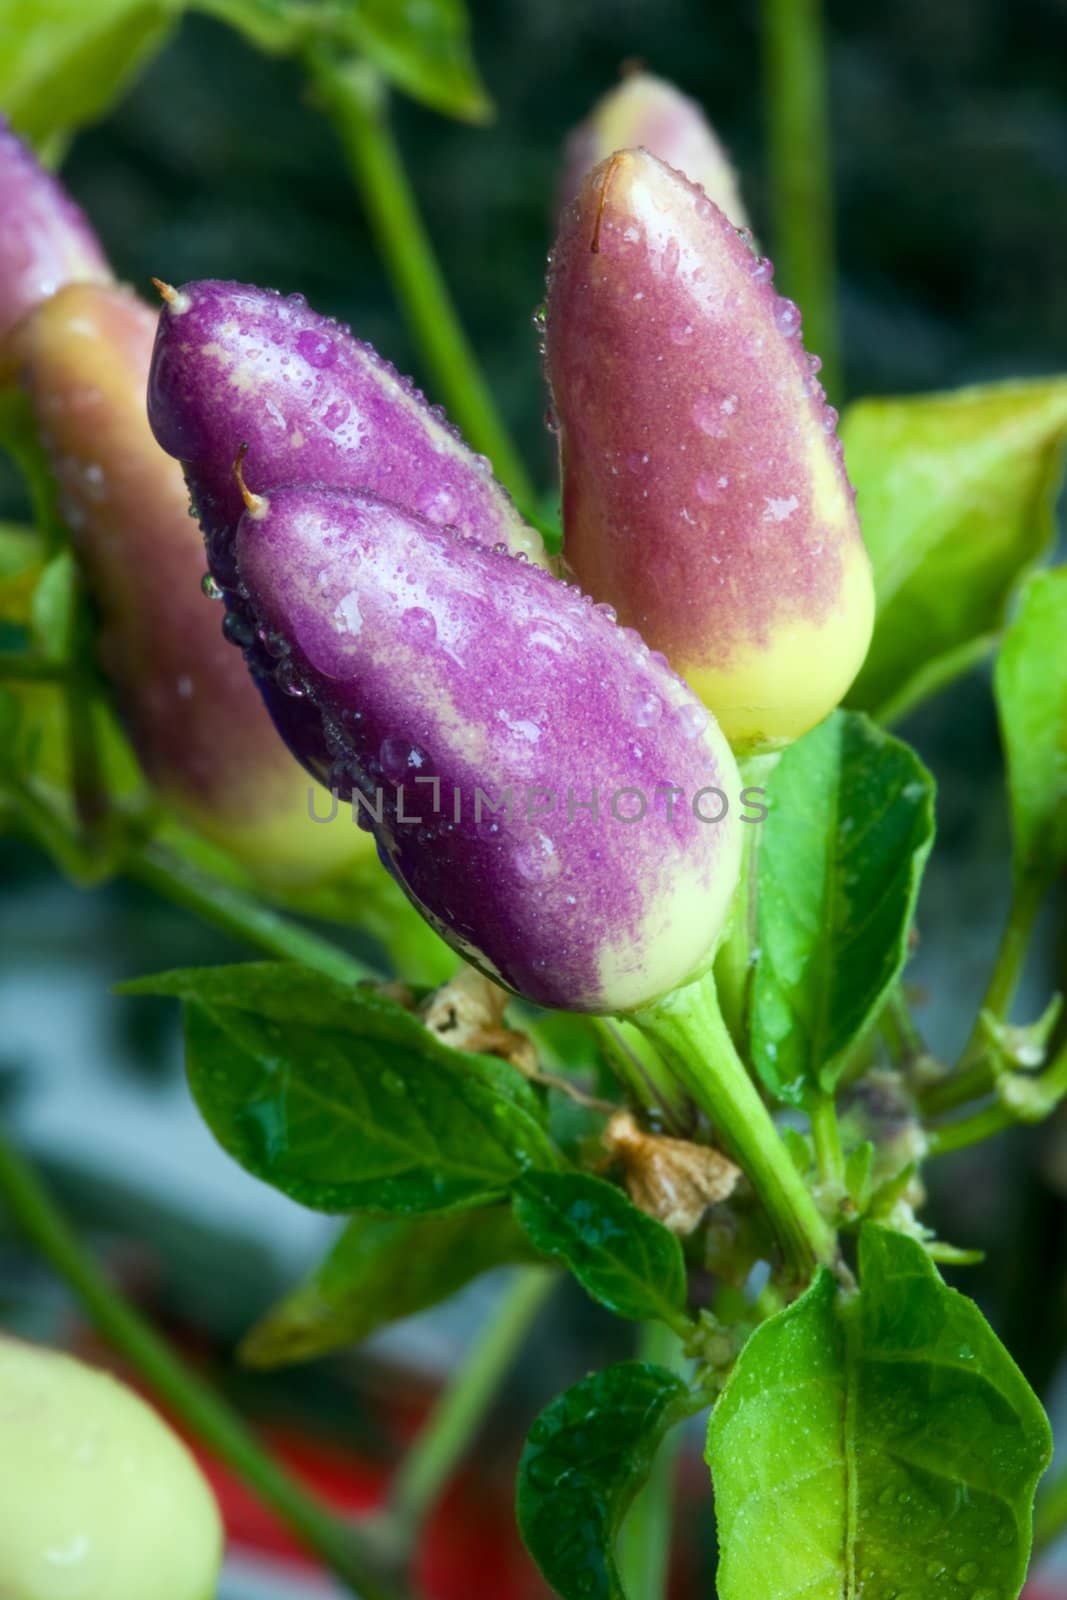 Unripe violet decorative pepper. With raindrops, august 2007